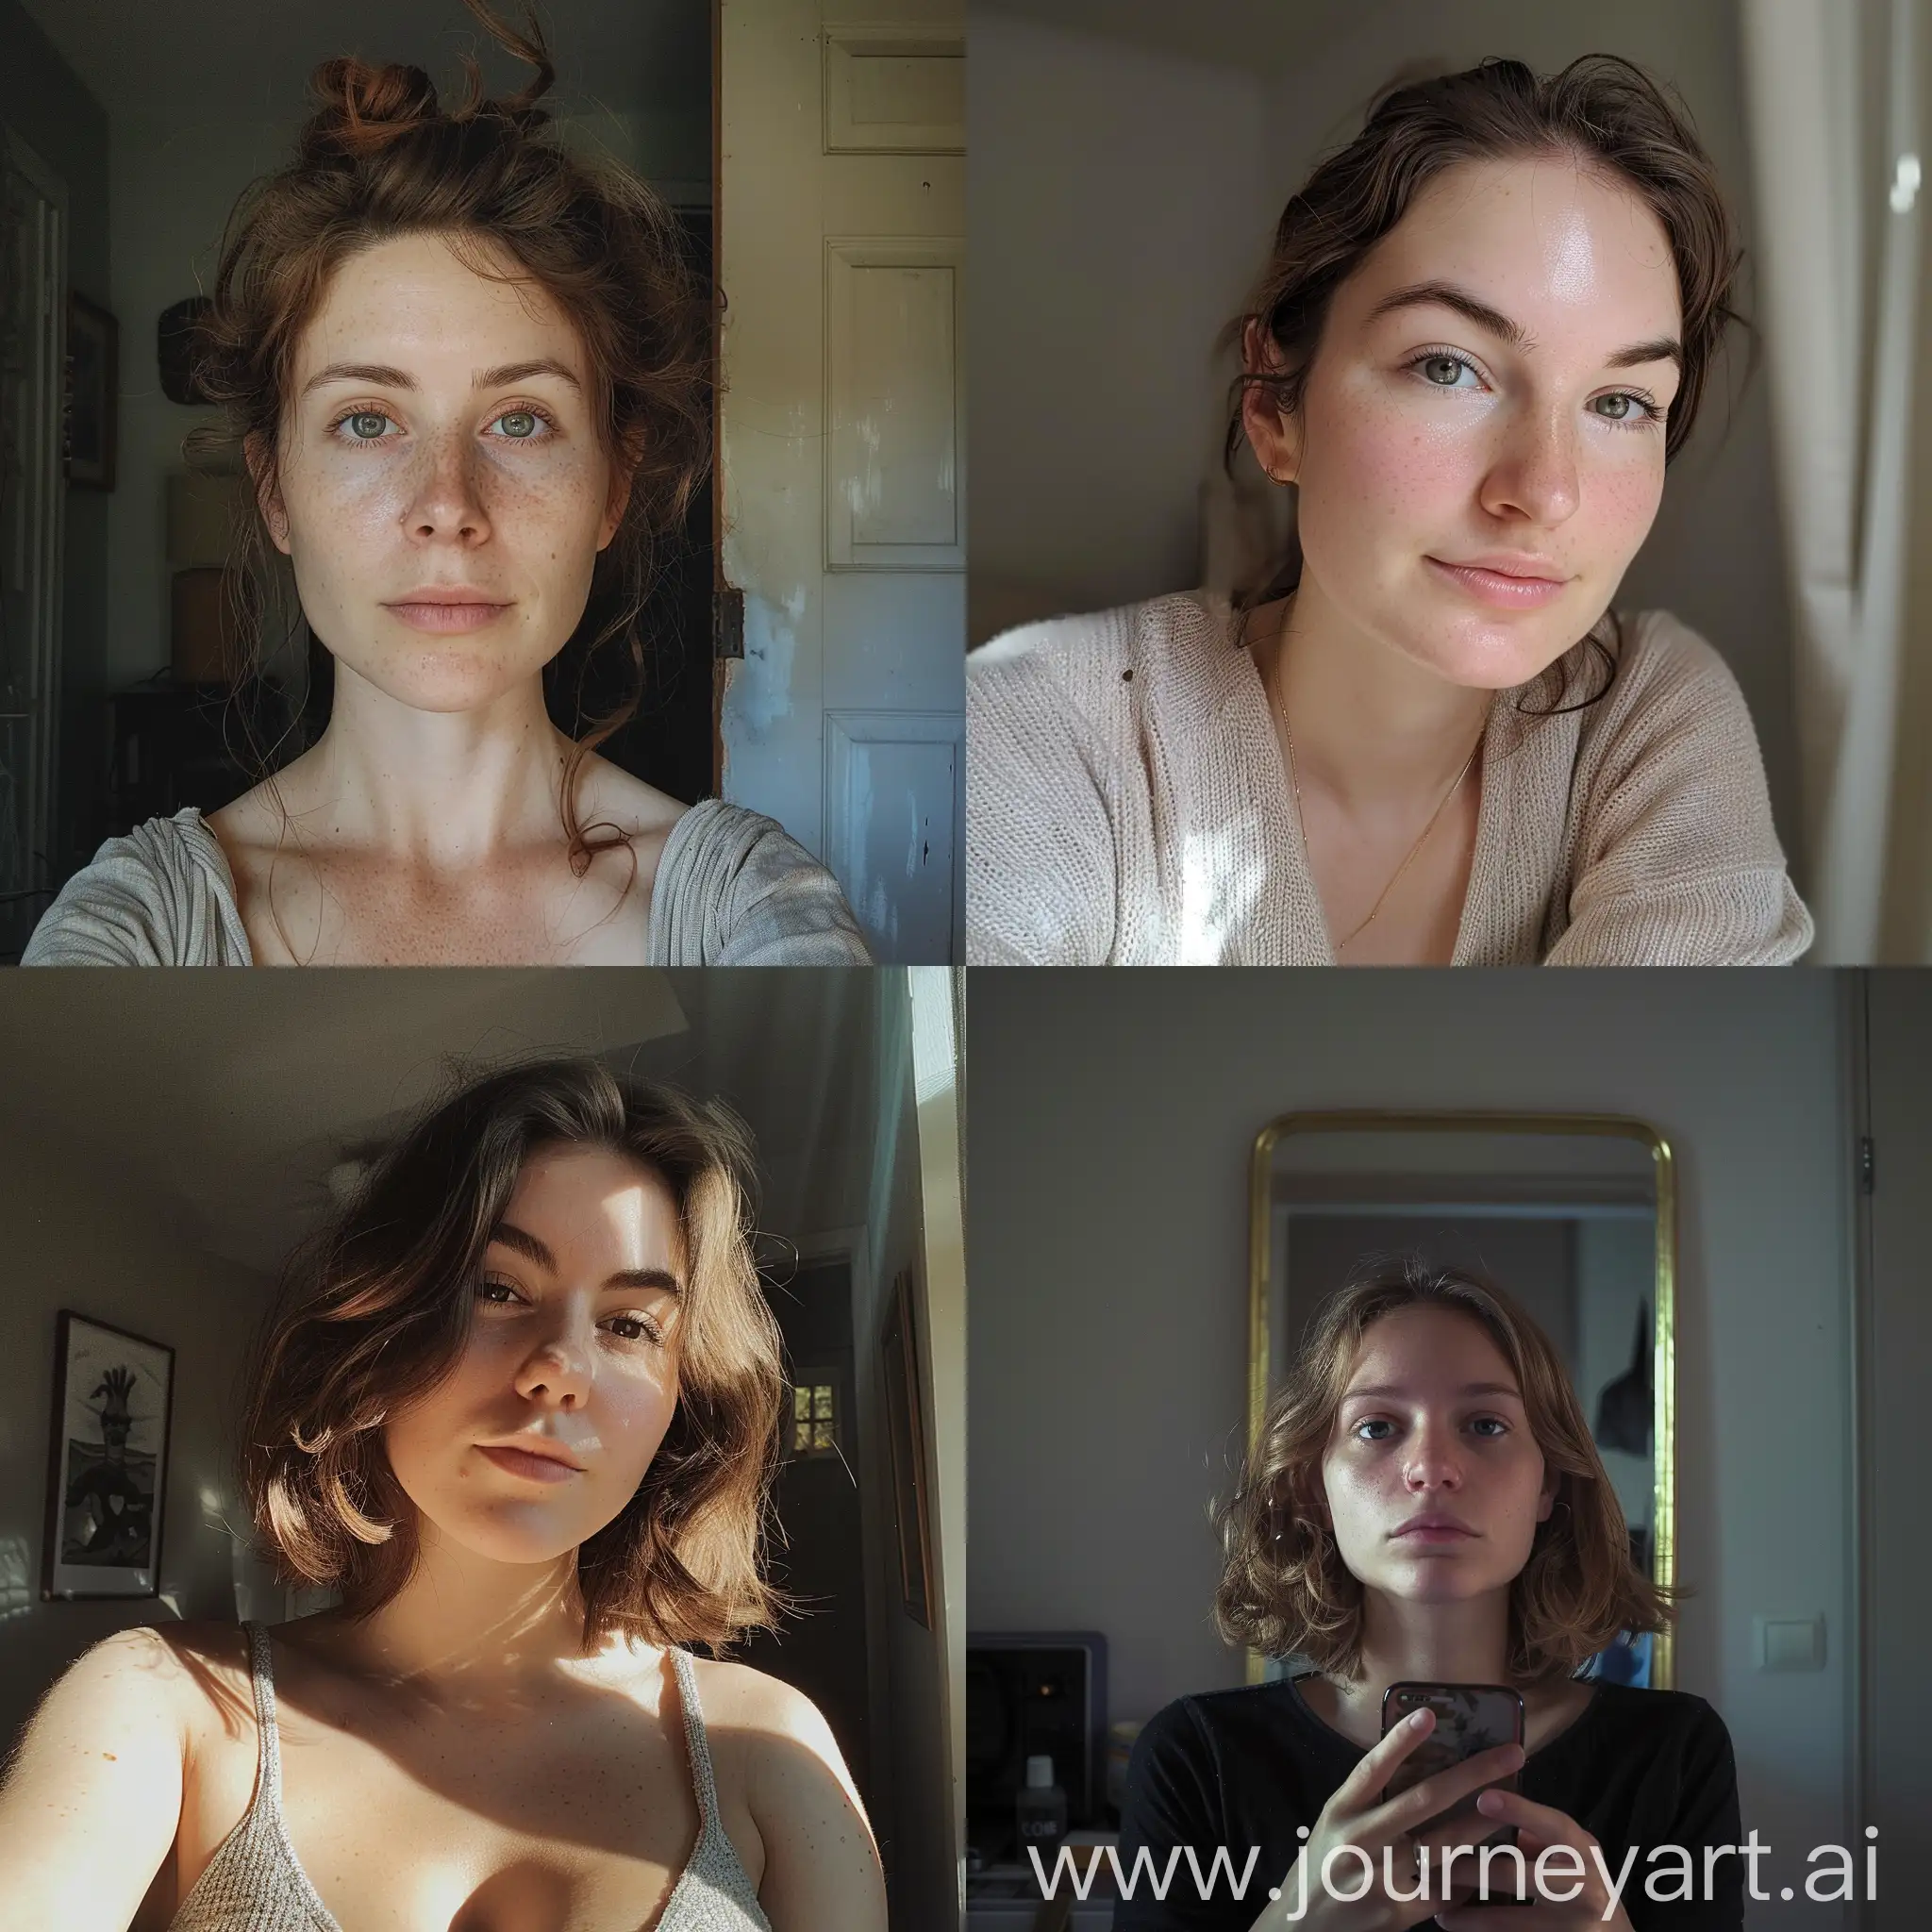 Interior selfie of a woman with [описываем внешность], shot on a low camera quality phone